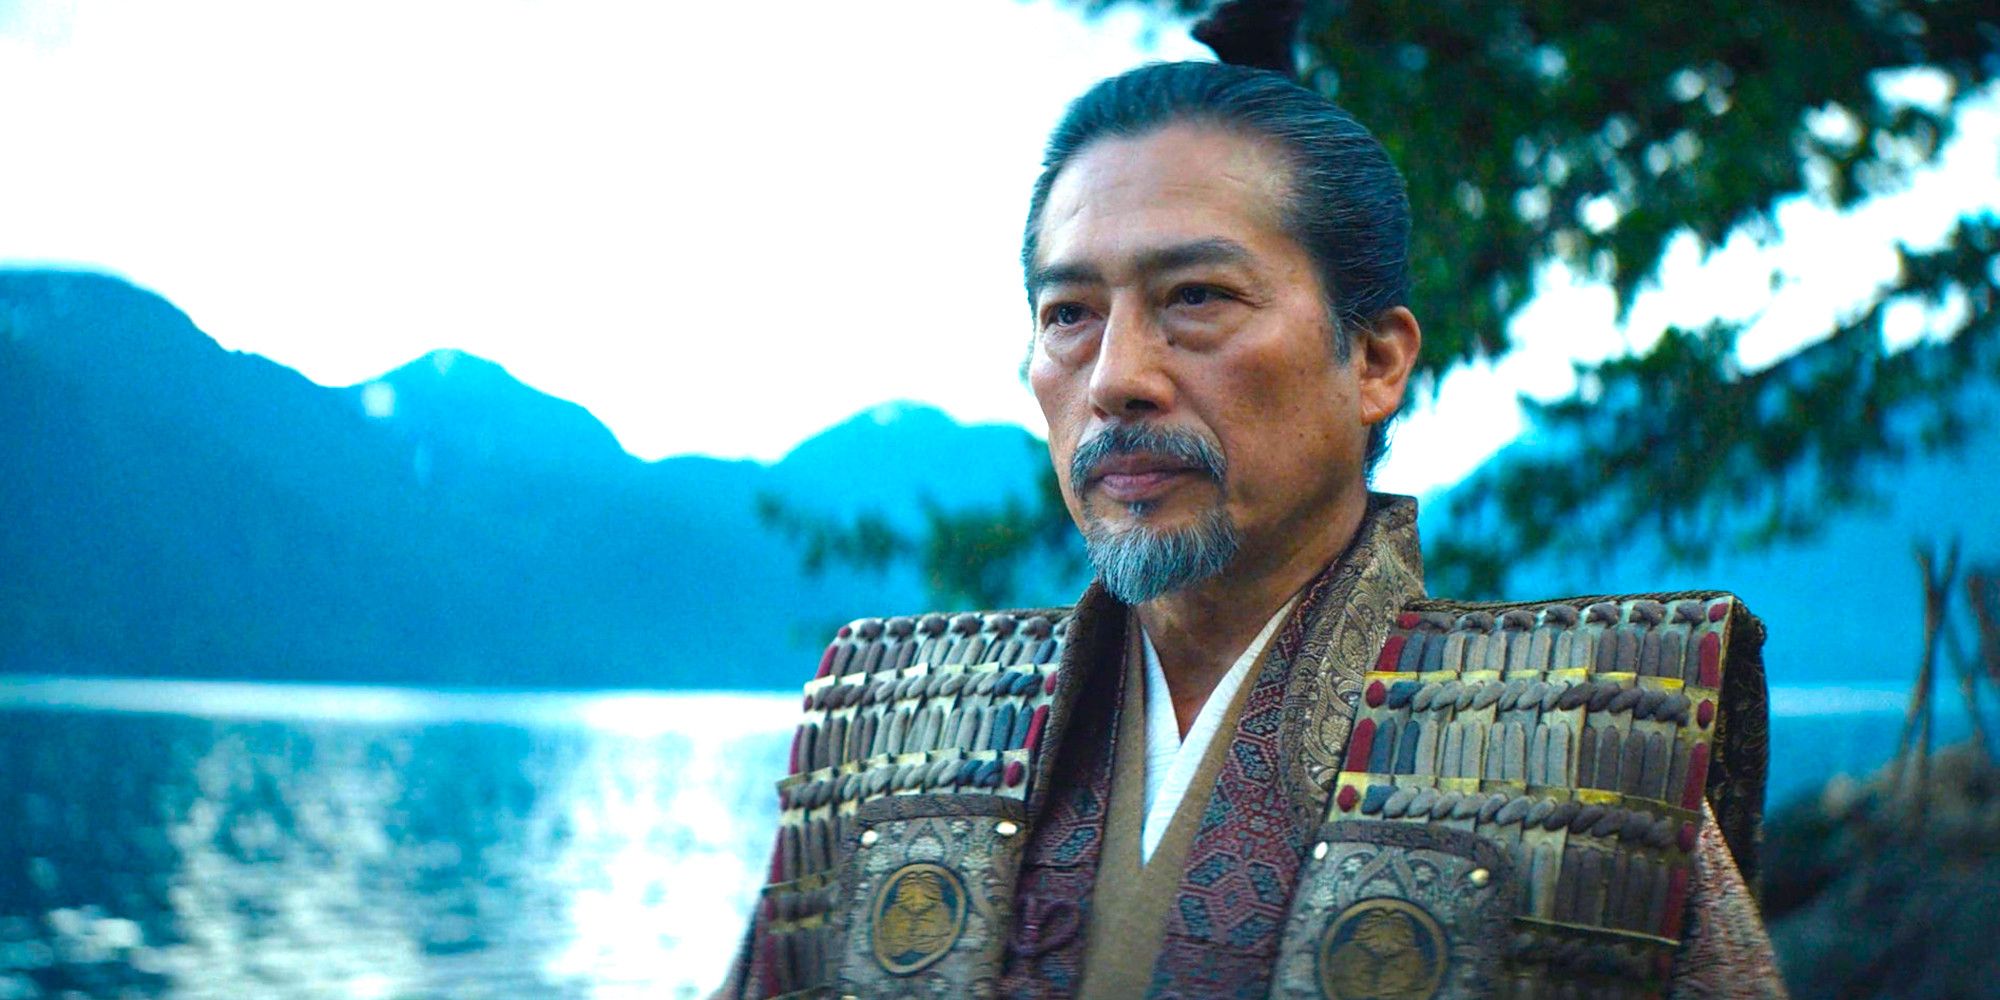 Toranaga wears a stern expression while standing next to a lake in a scene from Shogun season 1